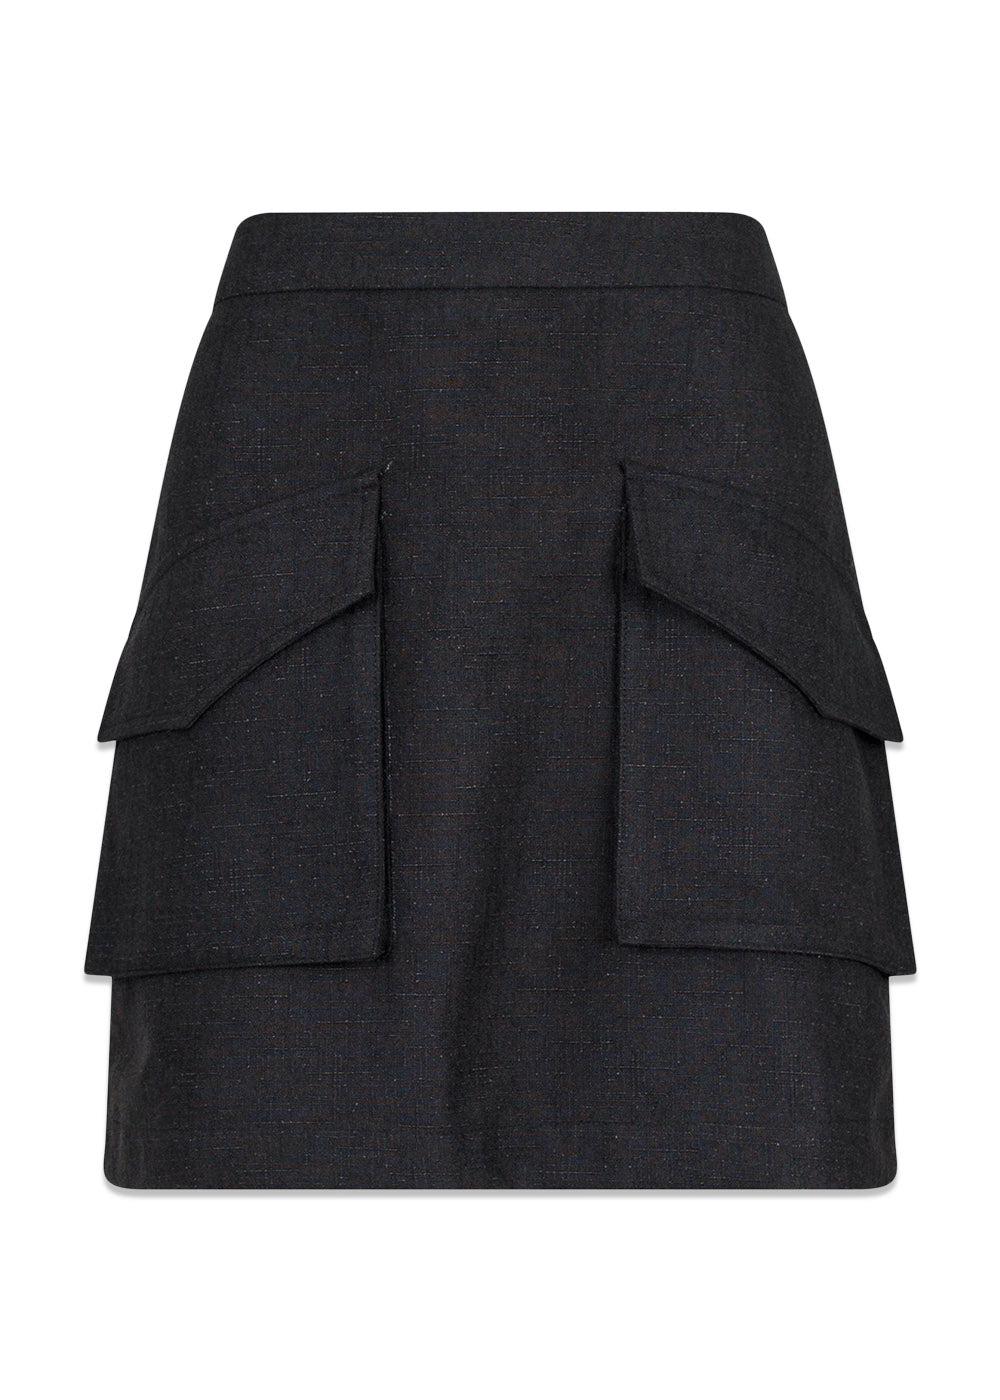 Janet Structure Skirt - Black